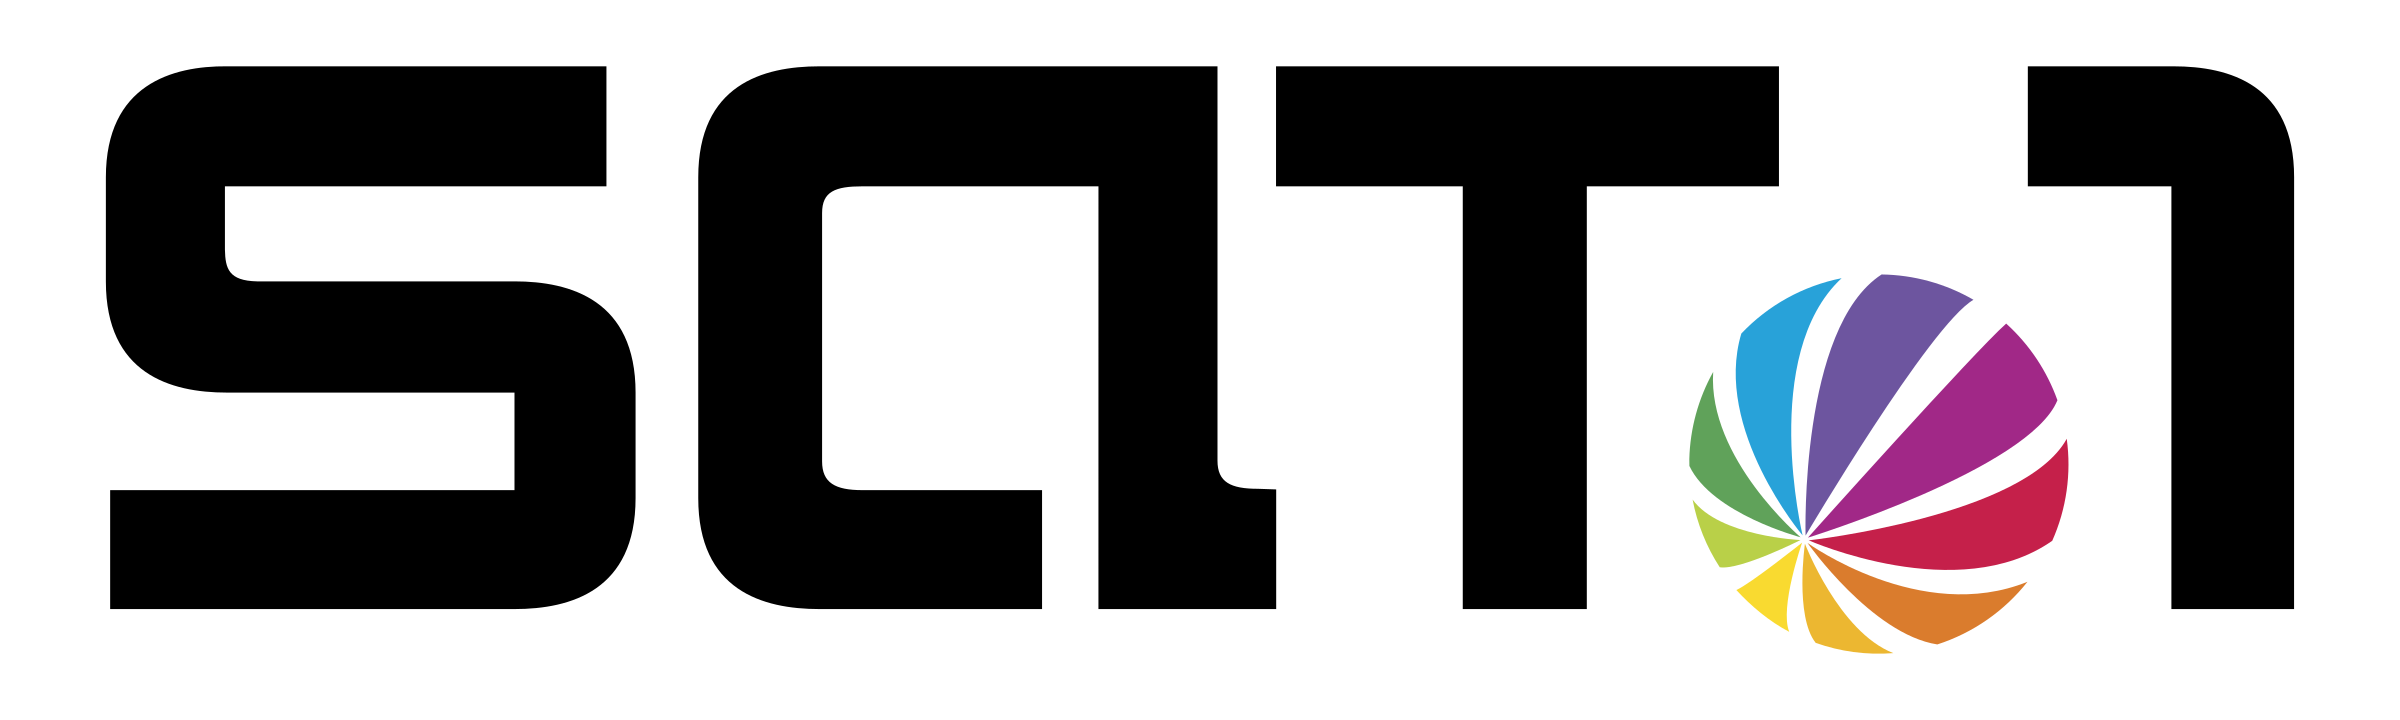 sat-1-logo-png-transparent Kopie